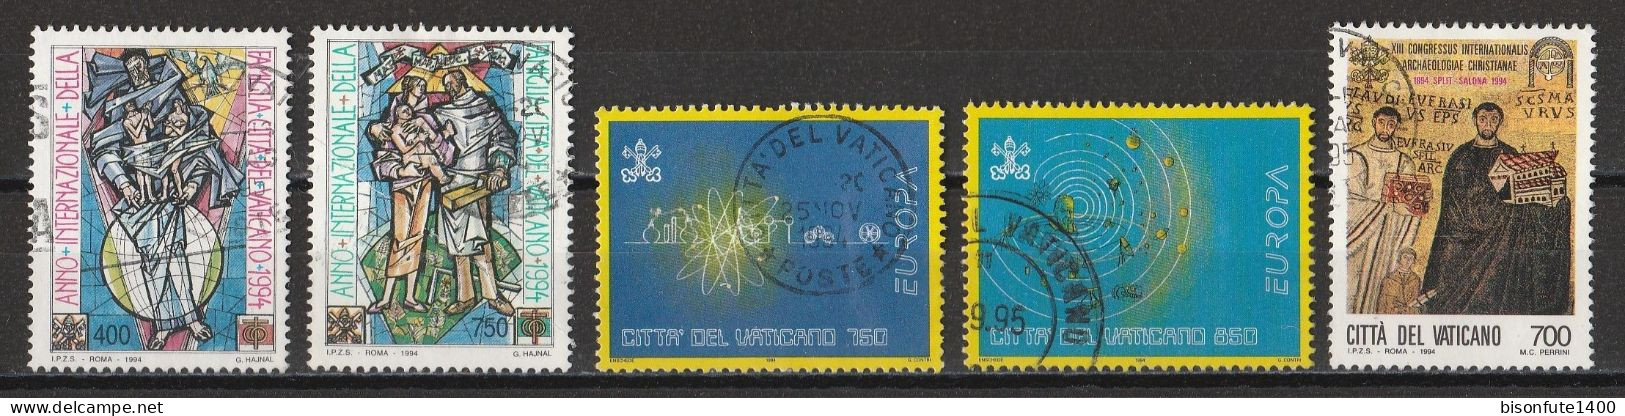 Vatican 1994 : Timbres Yvert & Tellier N° 980 - 981 - 984 - 985 - 987 - 991 - 993 - 995 - 996 Et 997 Se Tenant Et Oblit. - Gebraucht